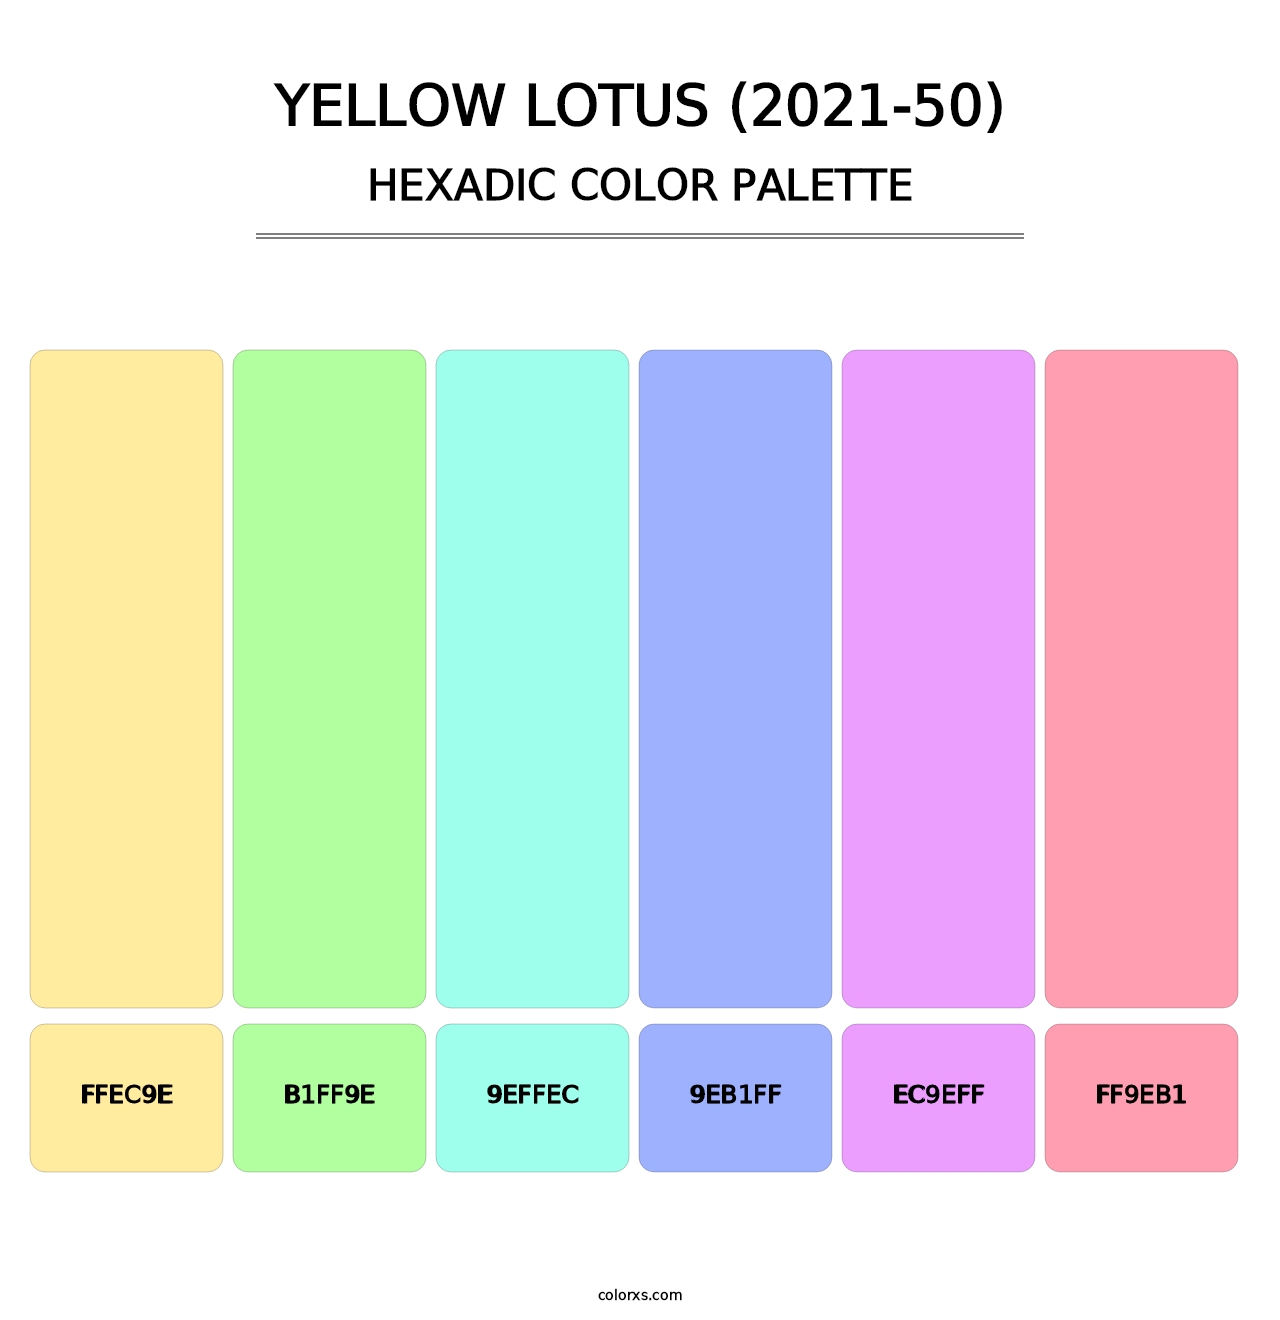 Yellow Lotus (2021-50) - Hexadic Color Palette